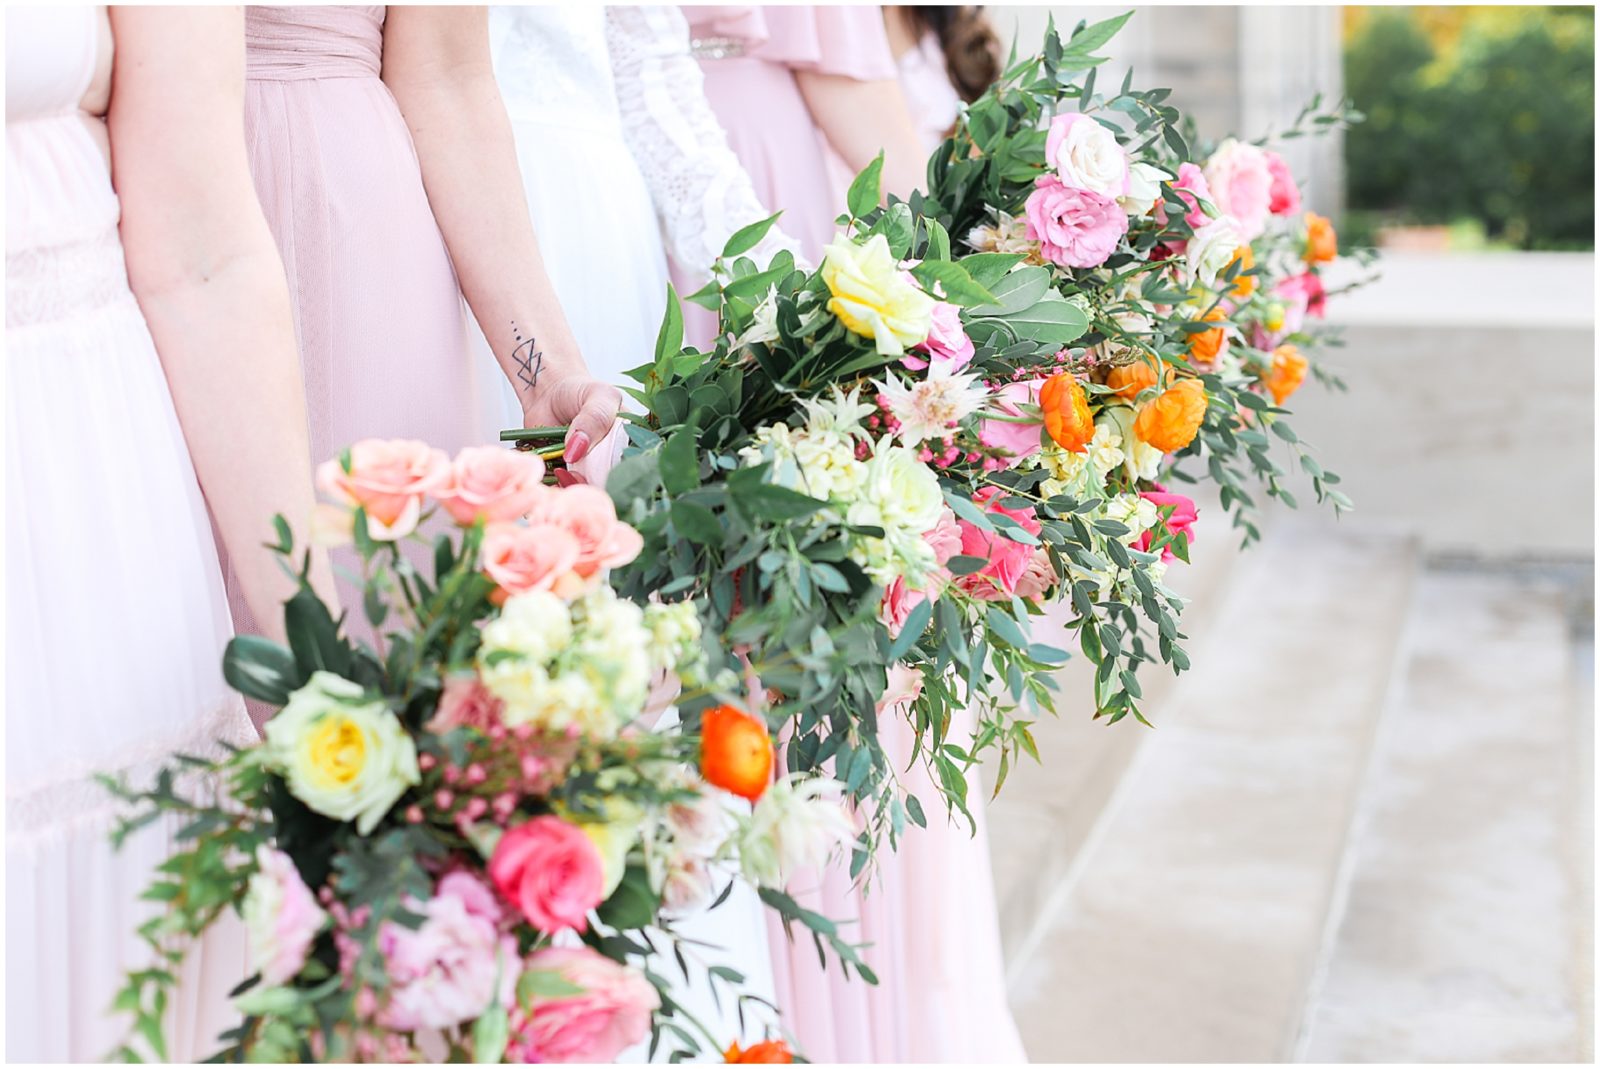 wedding bouquets - florals - wedding flowers - soltice floral studio - mariam saifan - bella bridesmaids - altar bridal